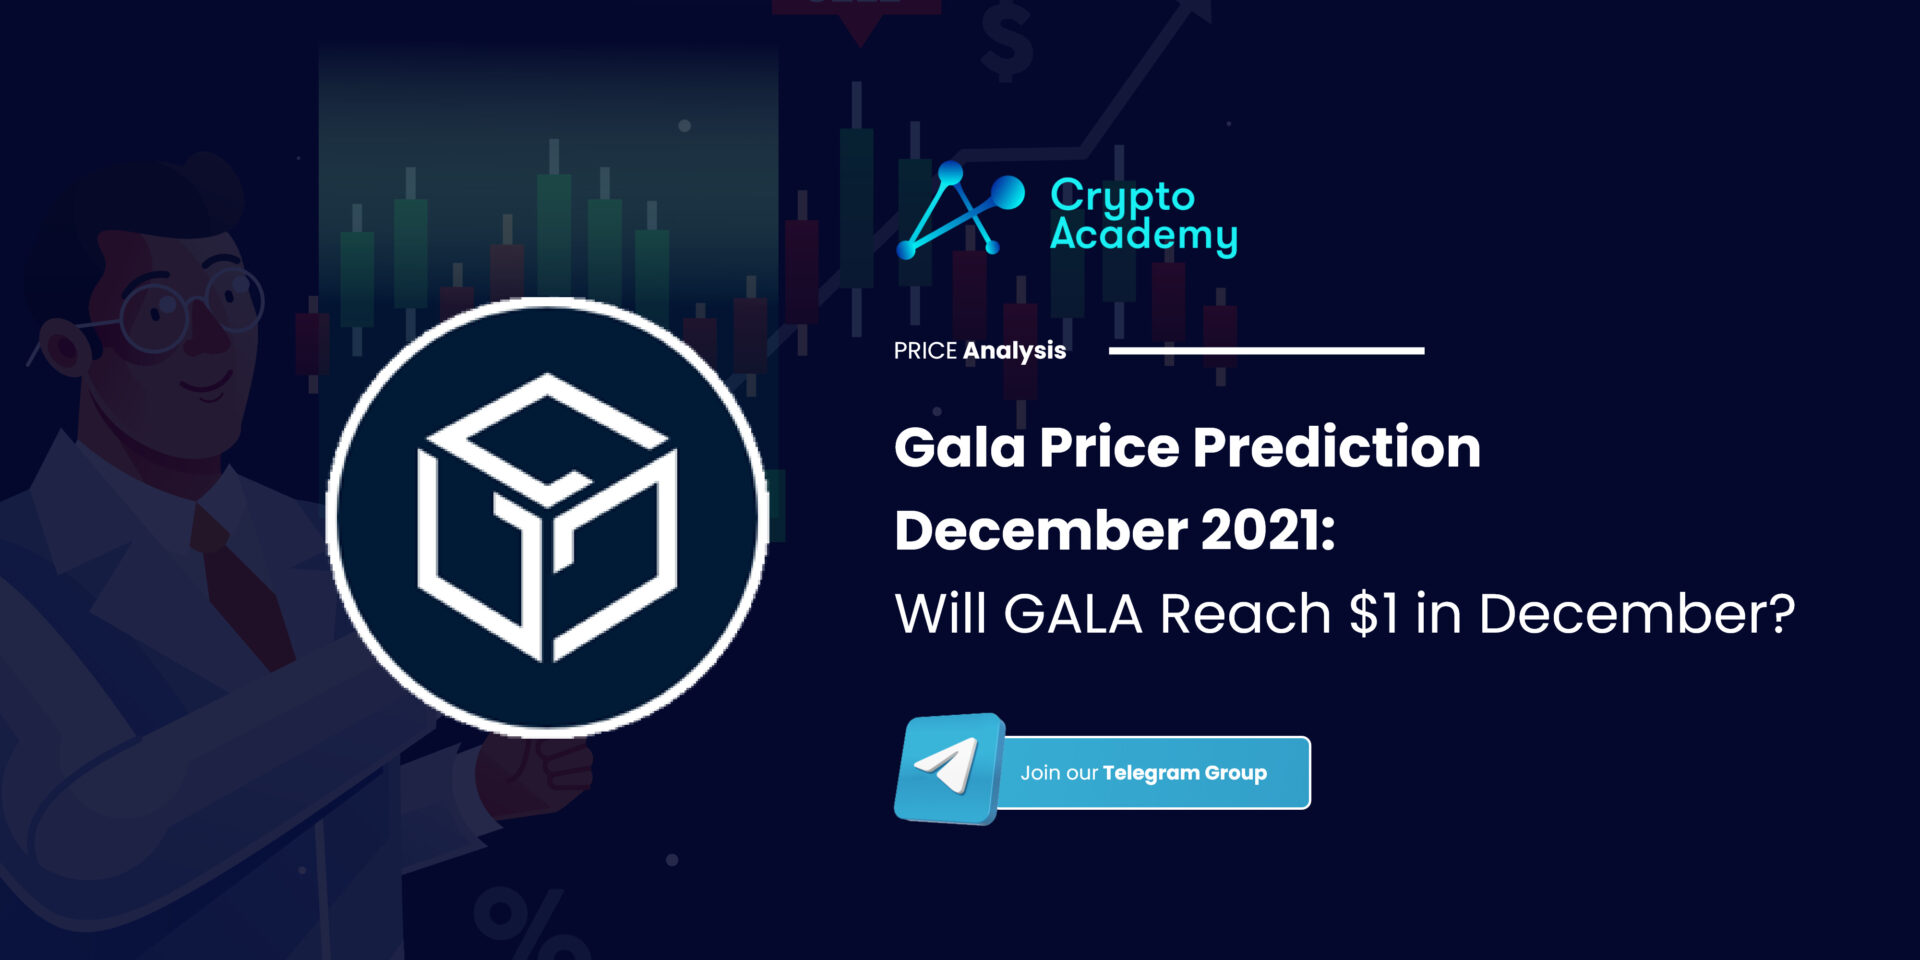 Gala Price Prediction December 2021: Will GALA Reach $1 in December?